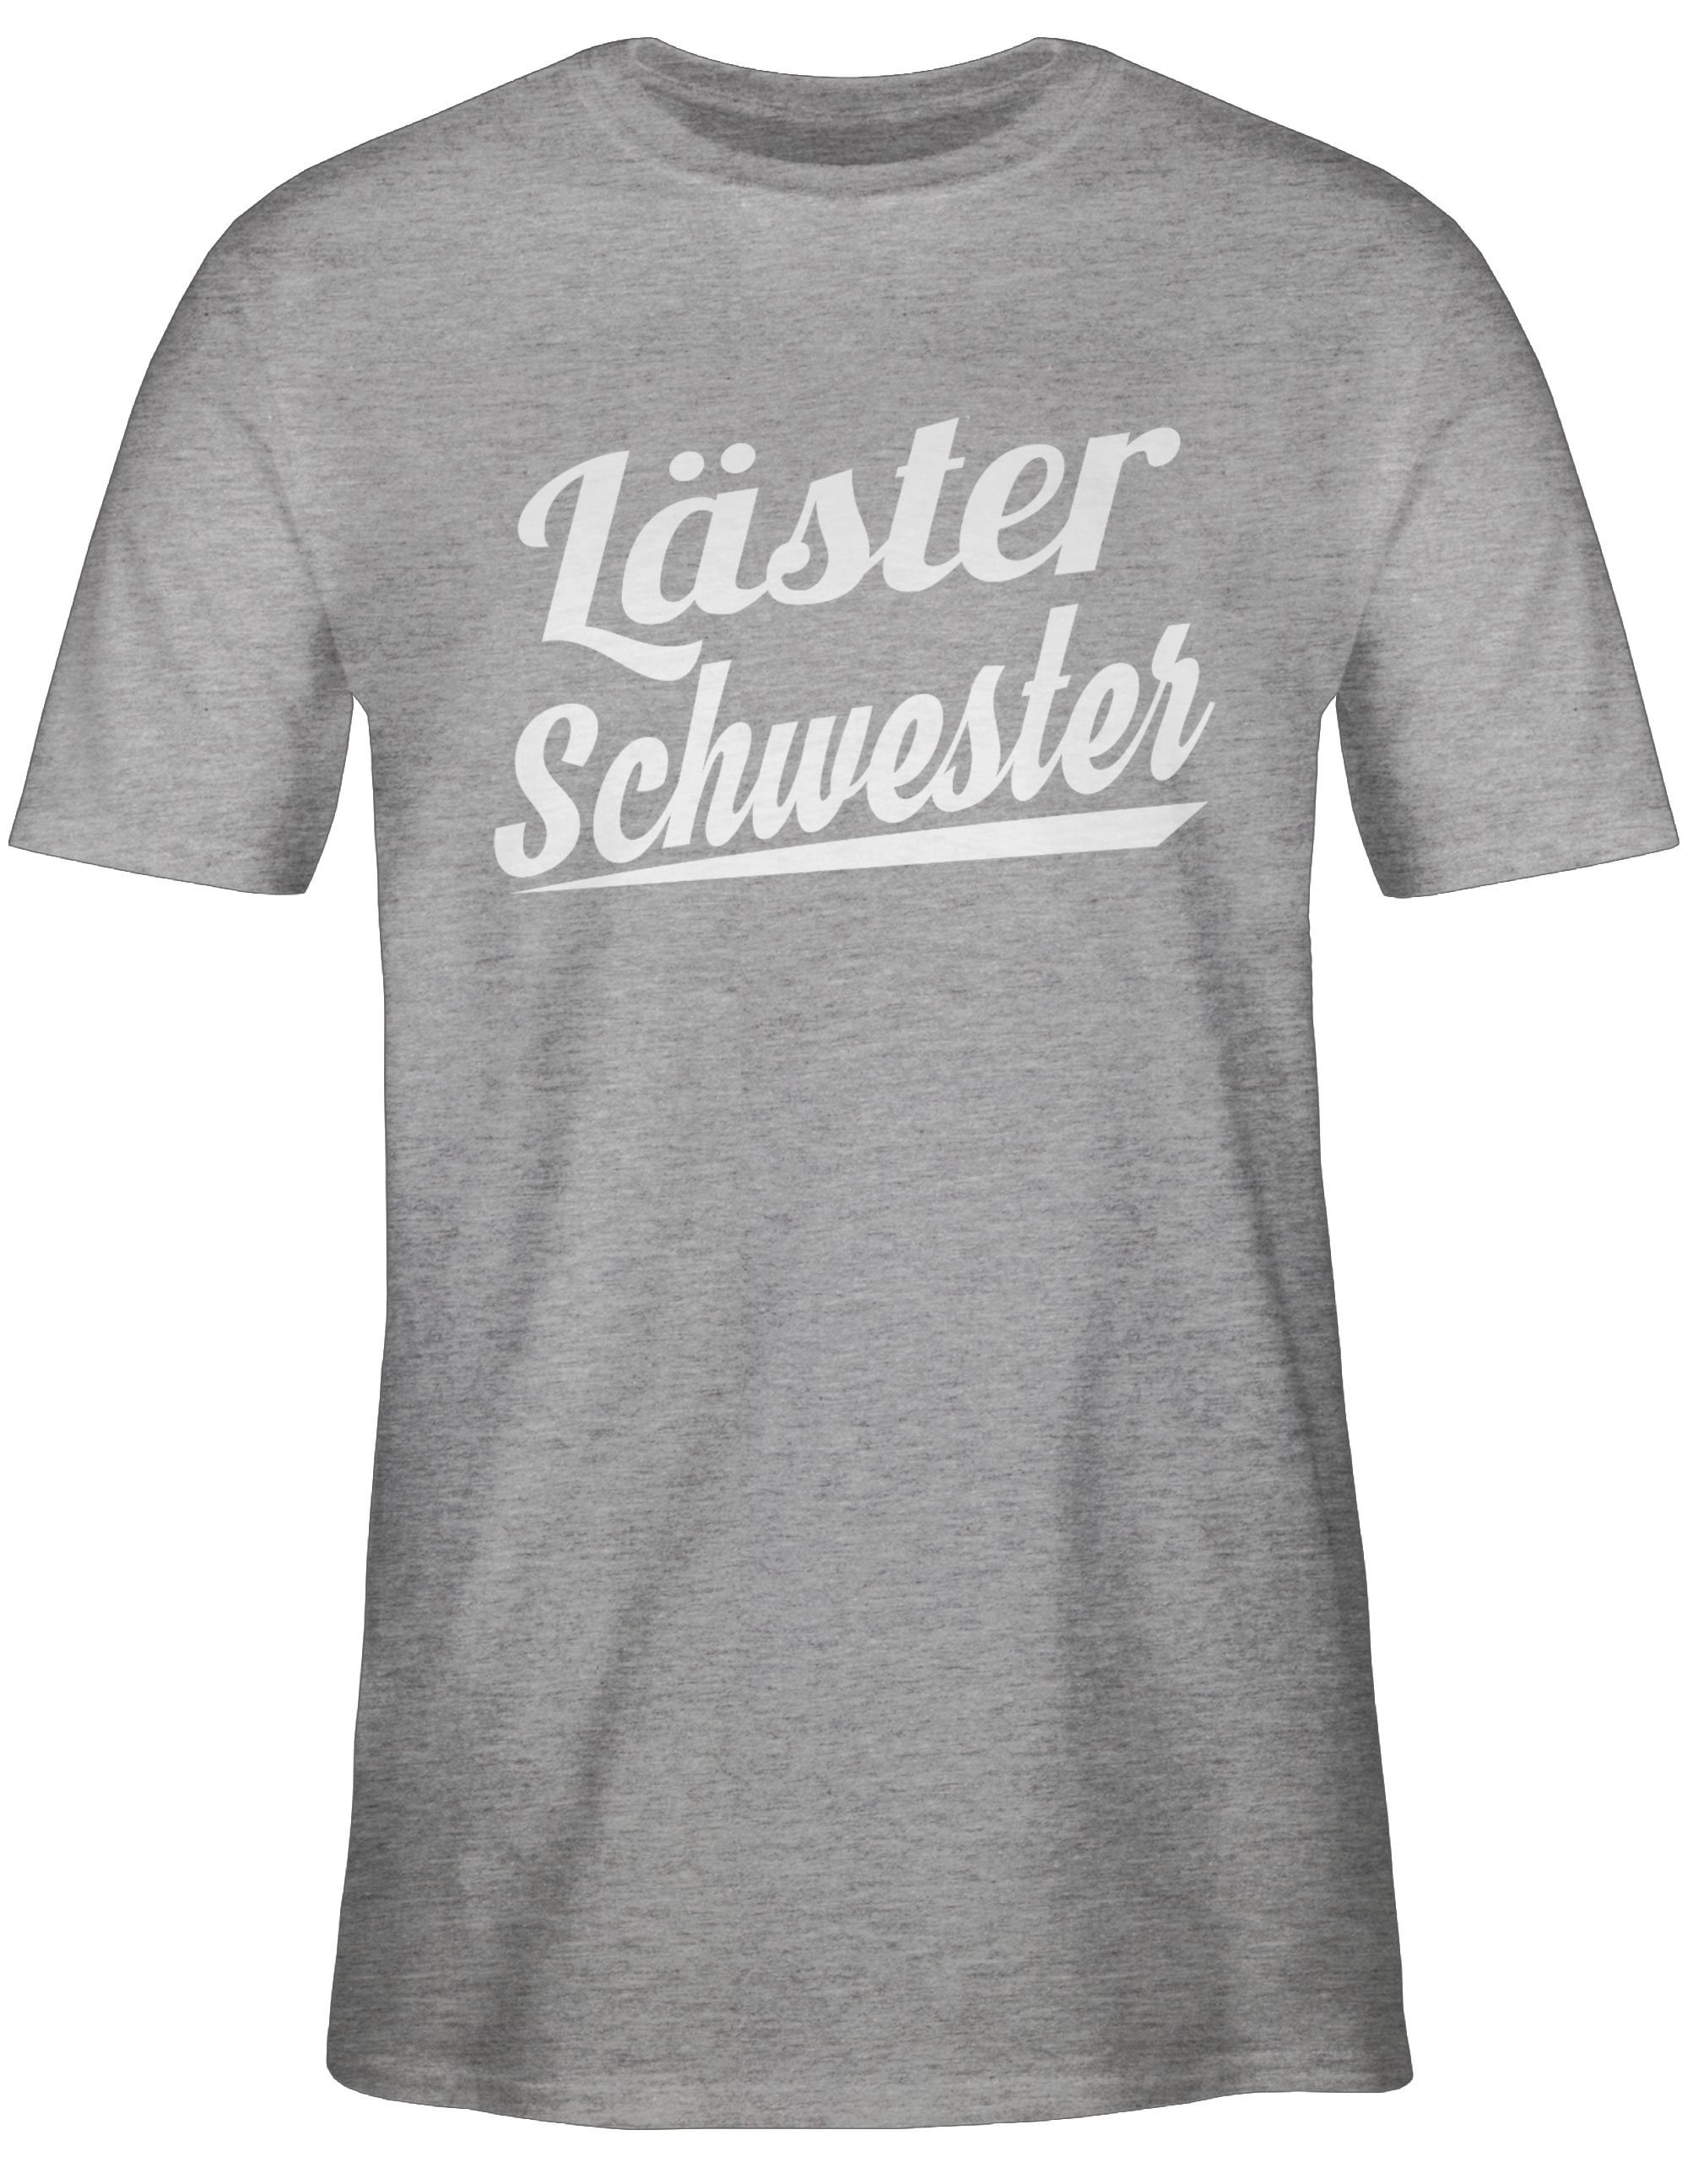 Shirtracer T-Shirt Läster Schwester - weiß Sprüche Statement 02 Grau meliert | T-Shirts